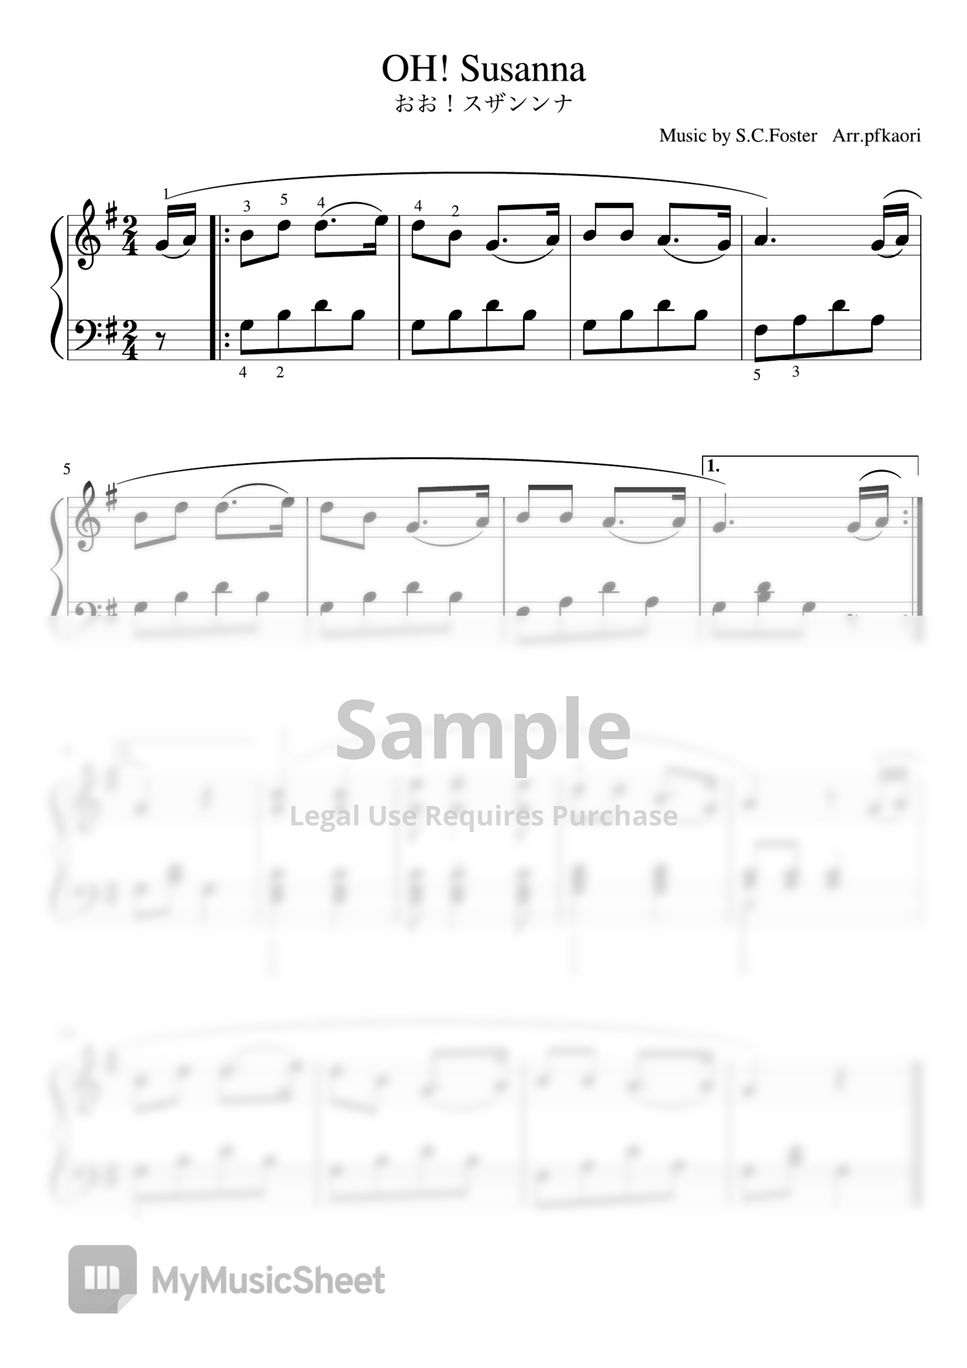 Oh! Susanna (G・pianosolo/beginner) by pfkaori